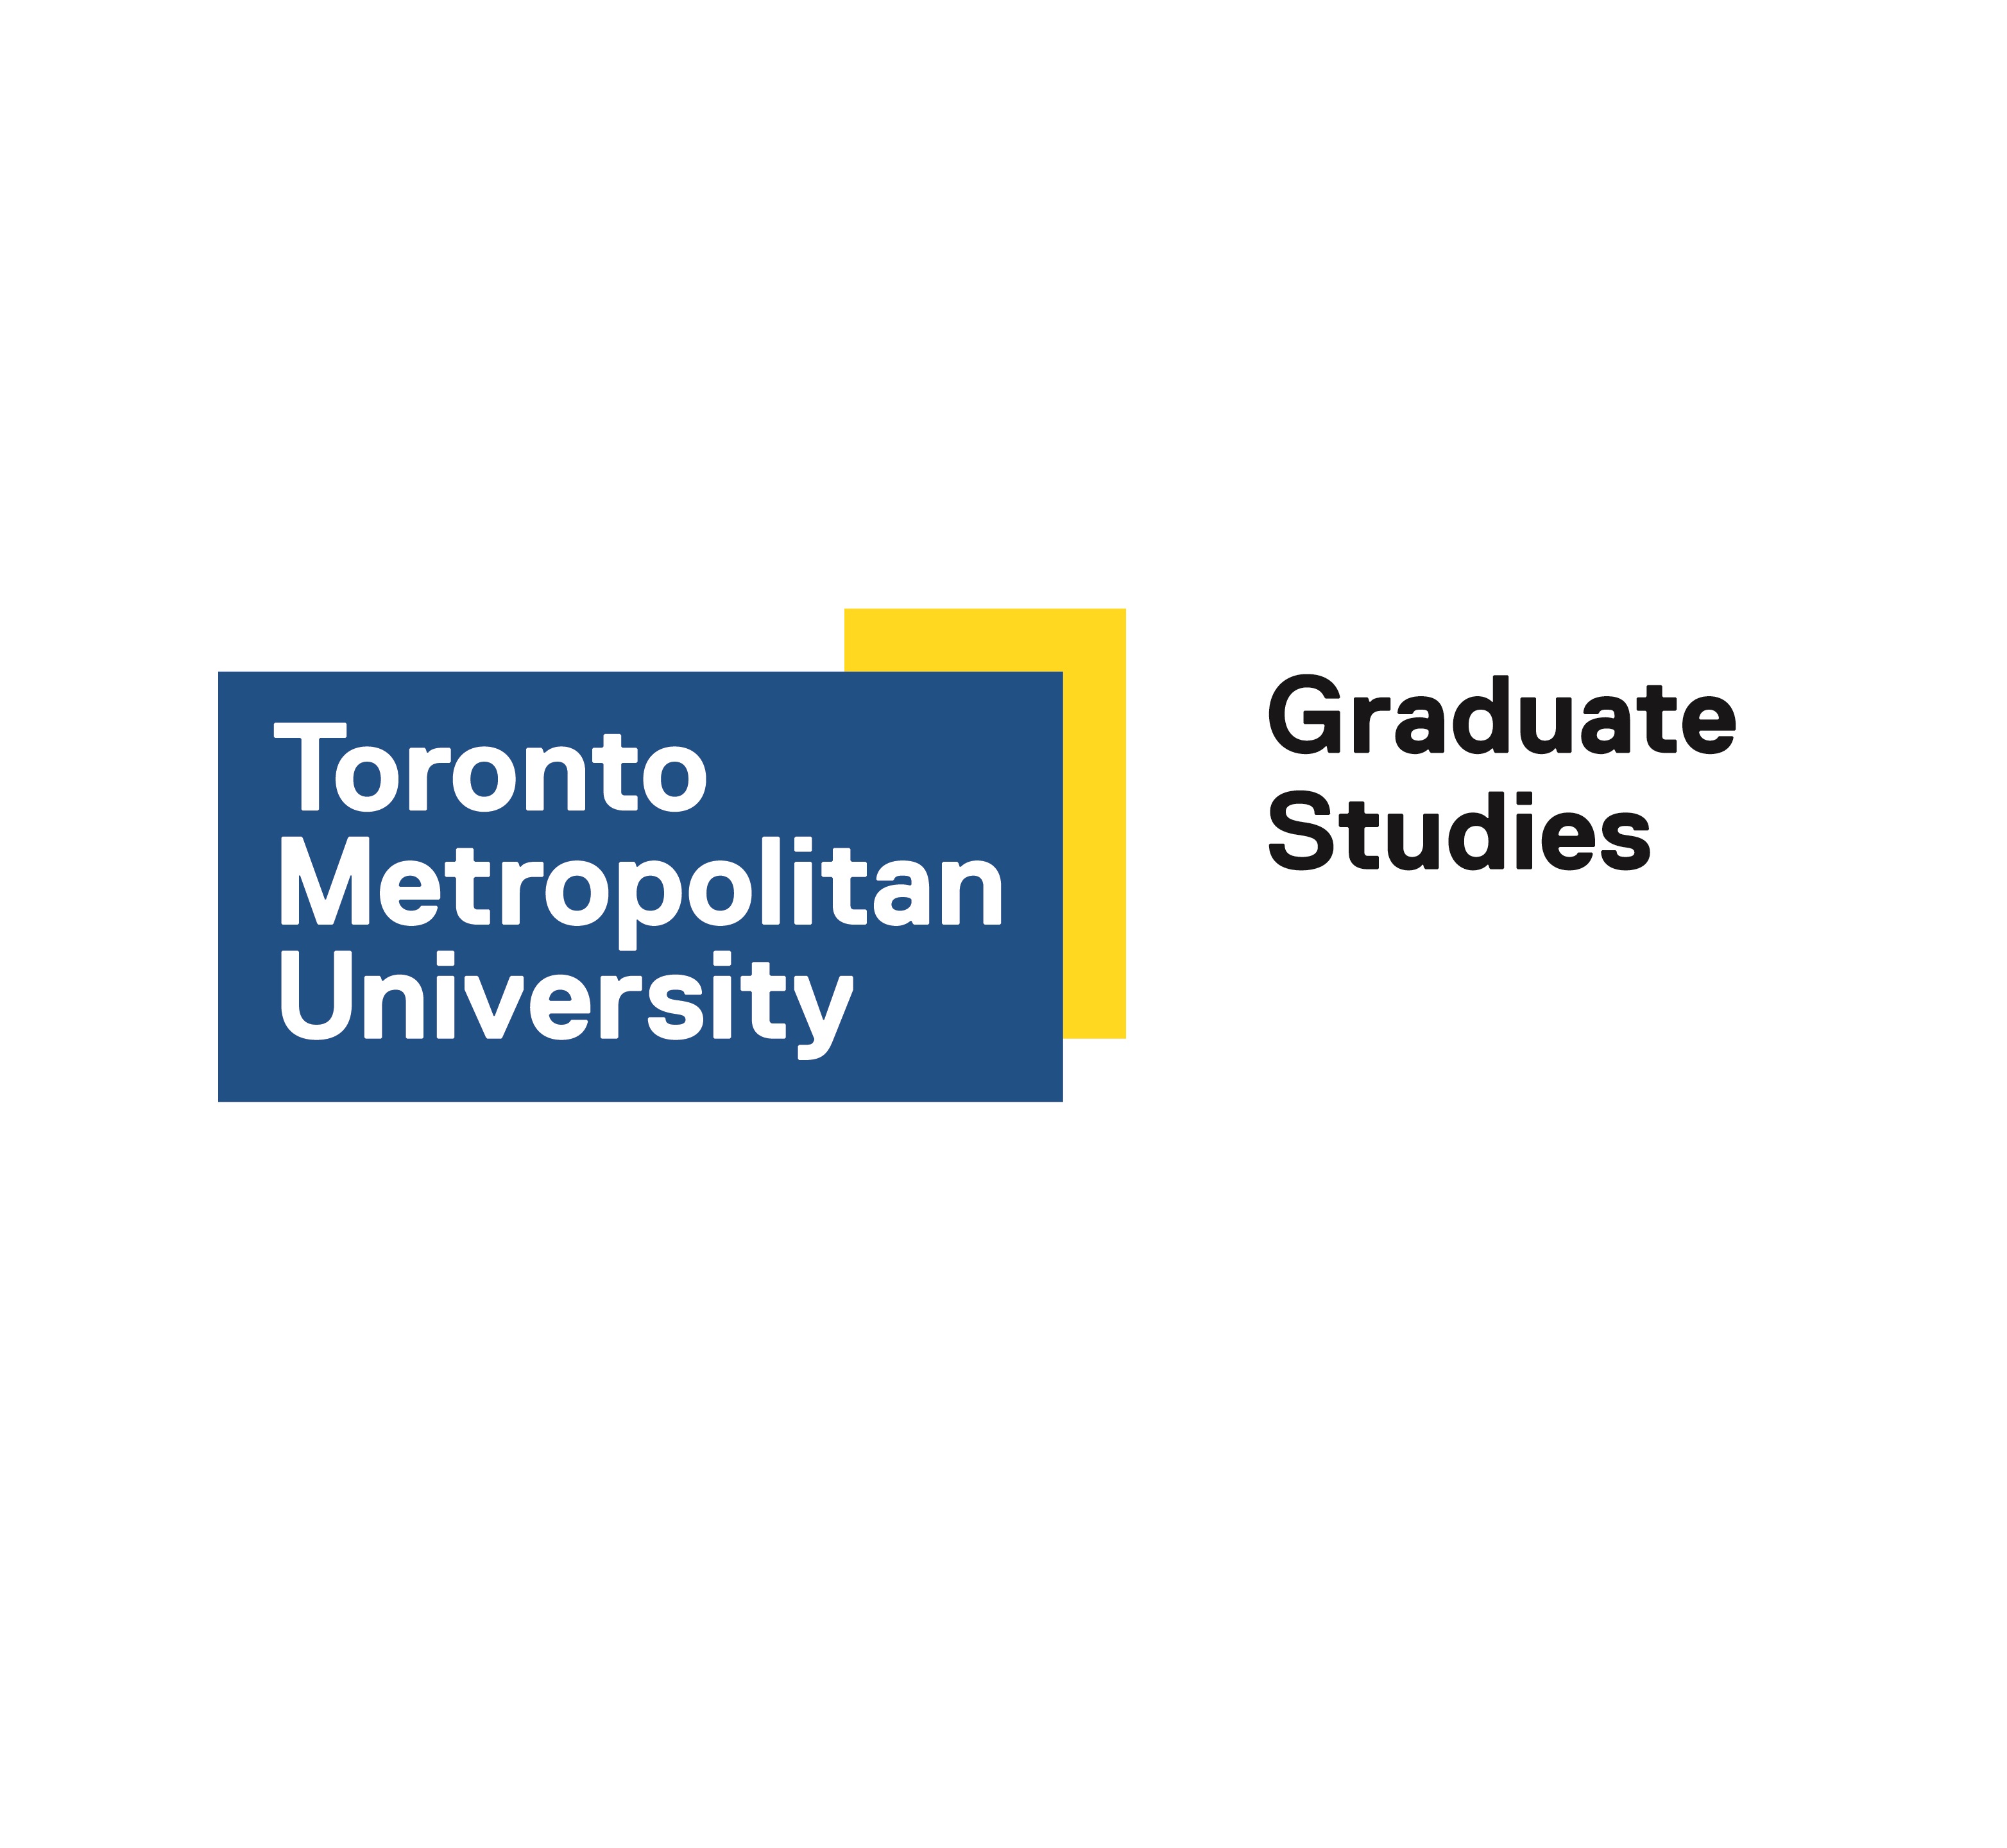 Showcase Image for Toronto Metropolitan University Graduate Studies